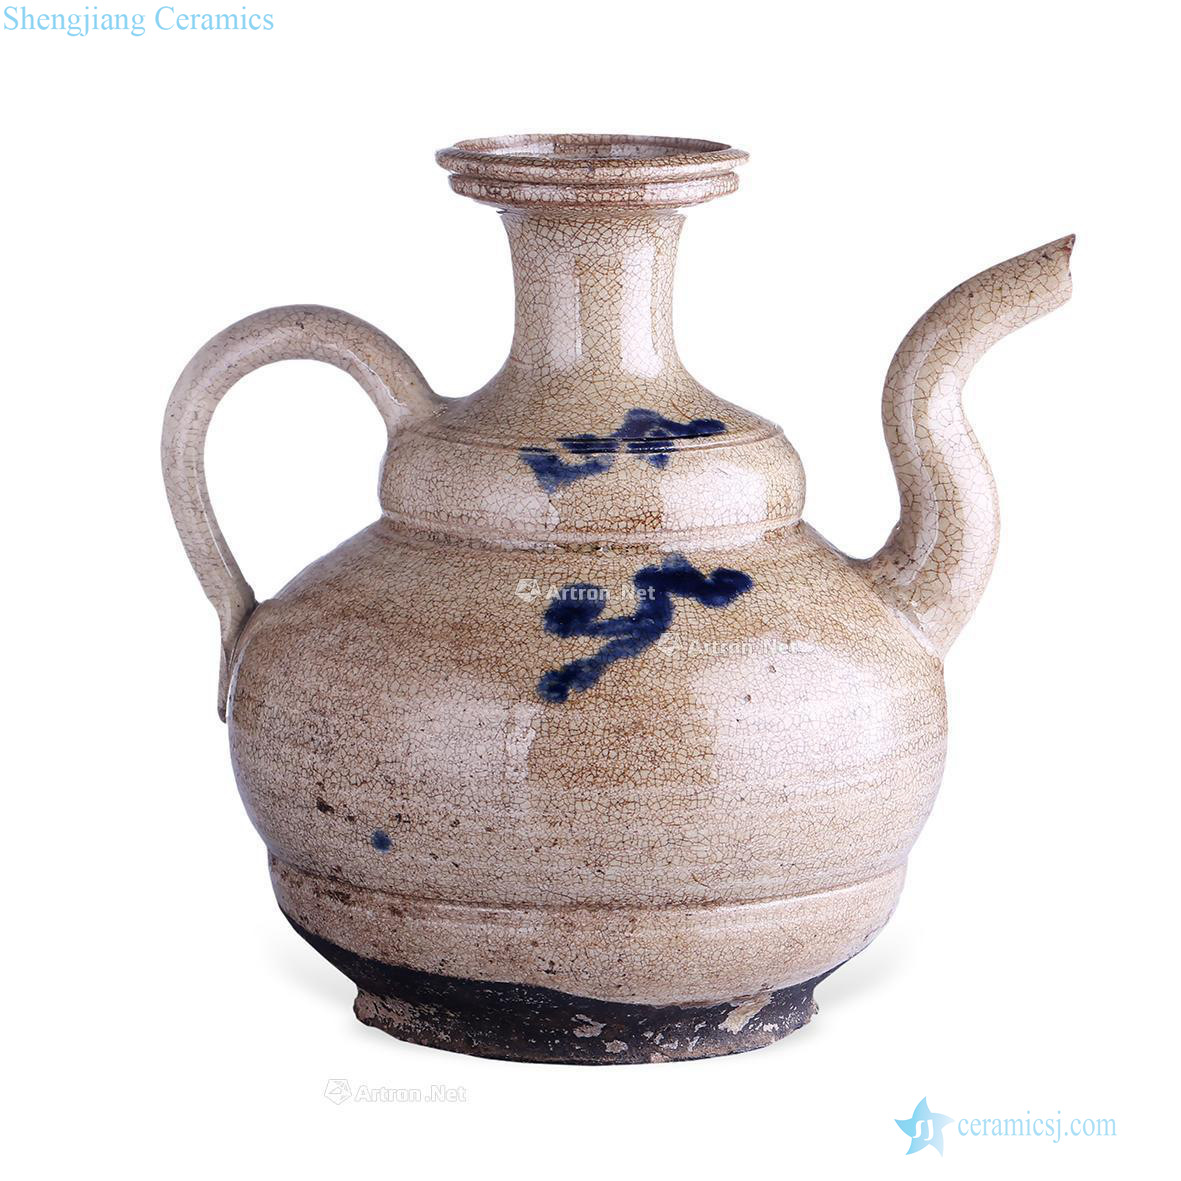 The yuan dynasty White glazed porcelain dish ewer